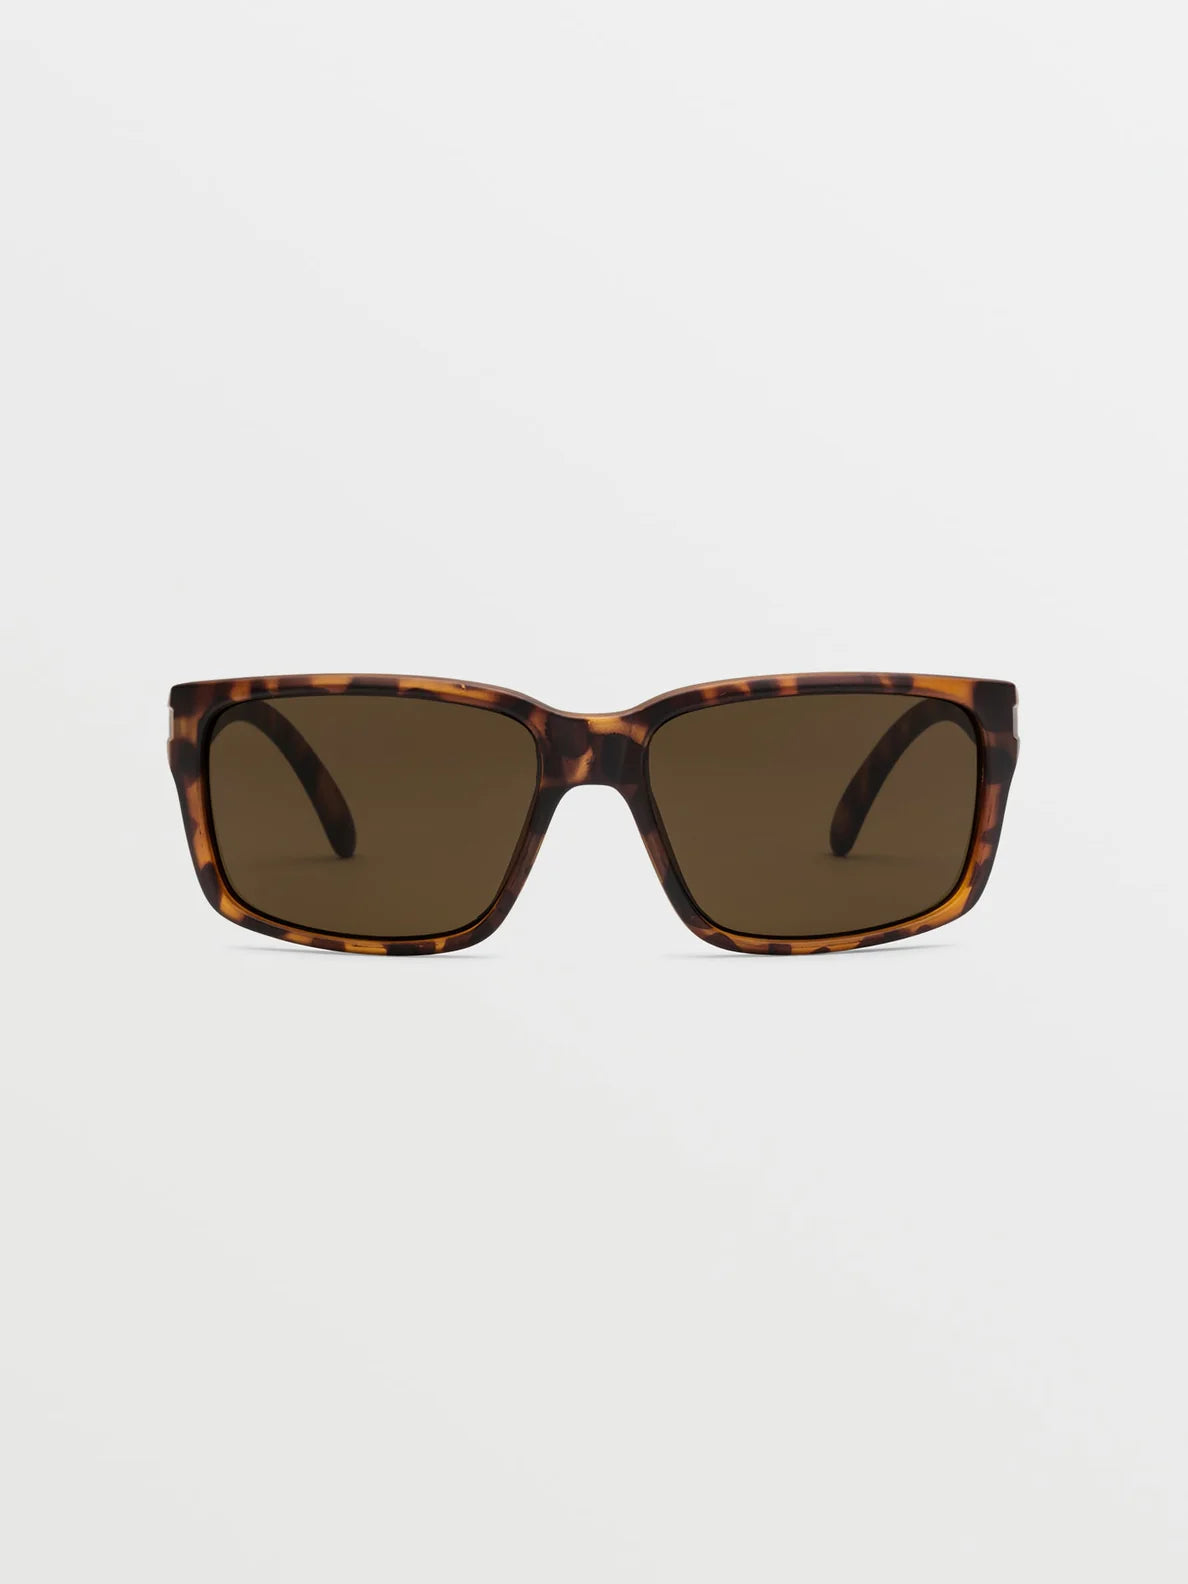 Volcom Sunglasses Stoneage Polarized Sunglasses Sunglasses Matte Tortoise Bronze Polar